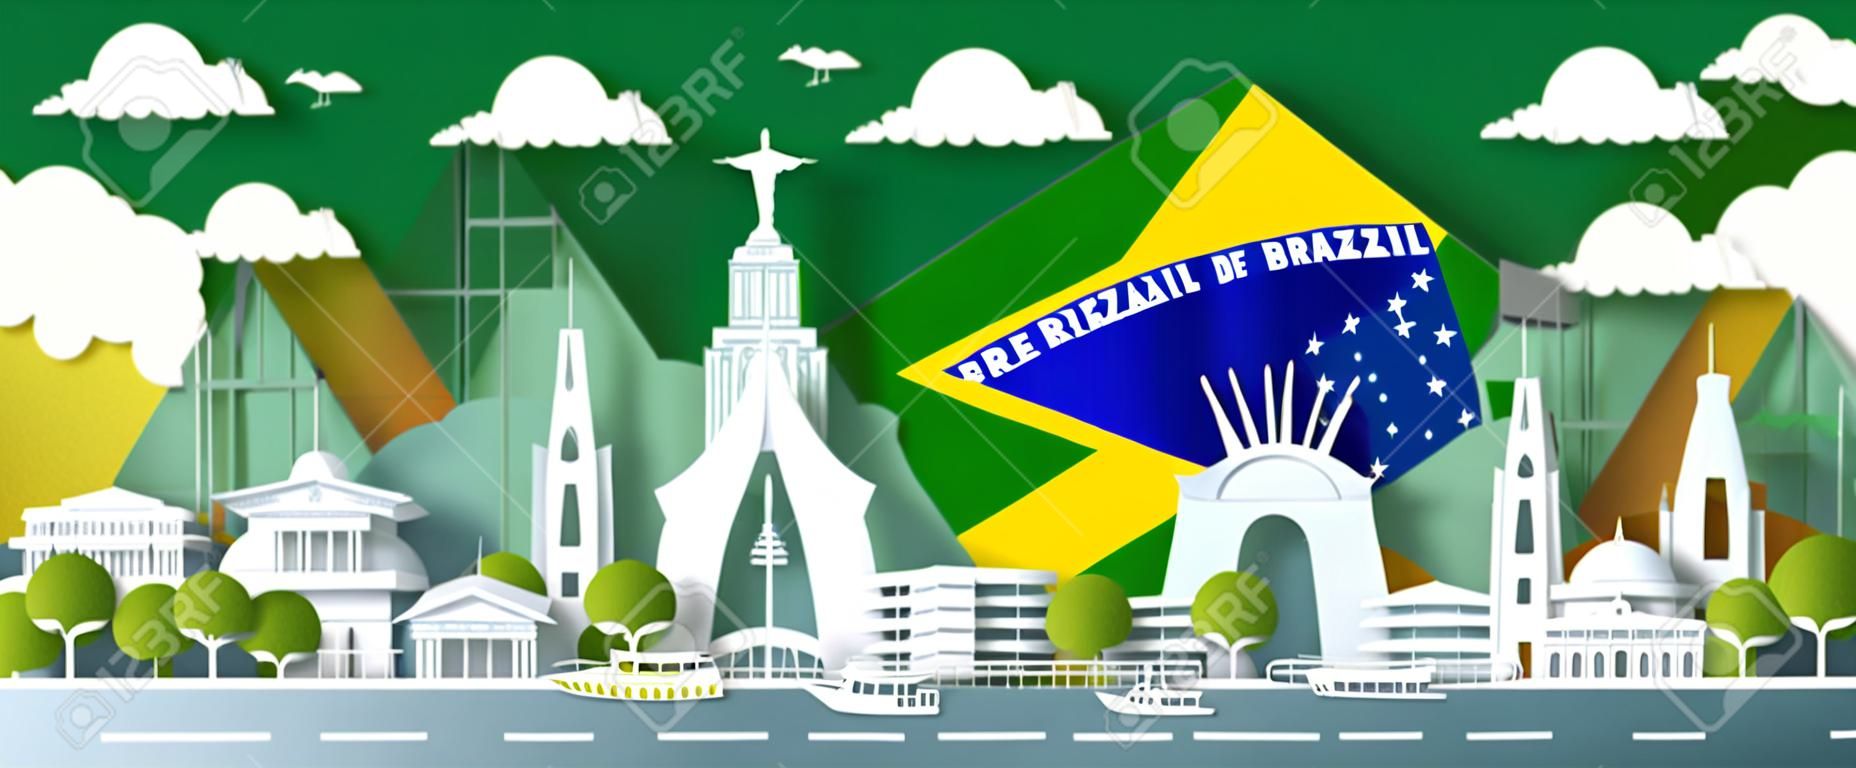 Landmark illustration anniversary celebration Brazil day with green flag background. Travel landmarks city architecture of Brazil in Rio de Janeiro in paper art, paper cut style. Vector illustration